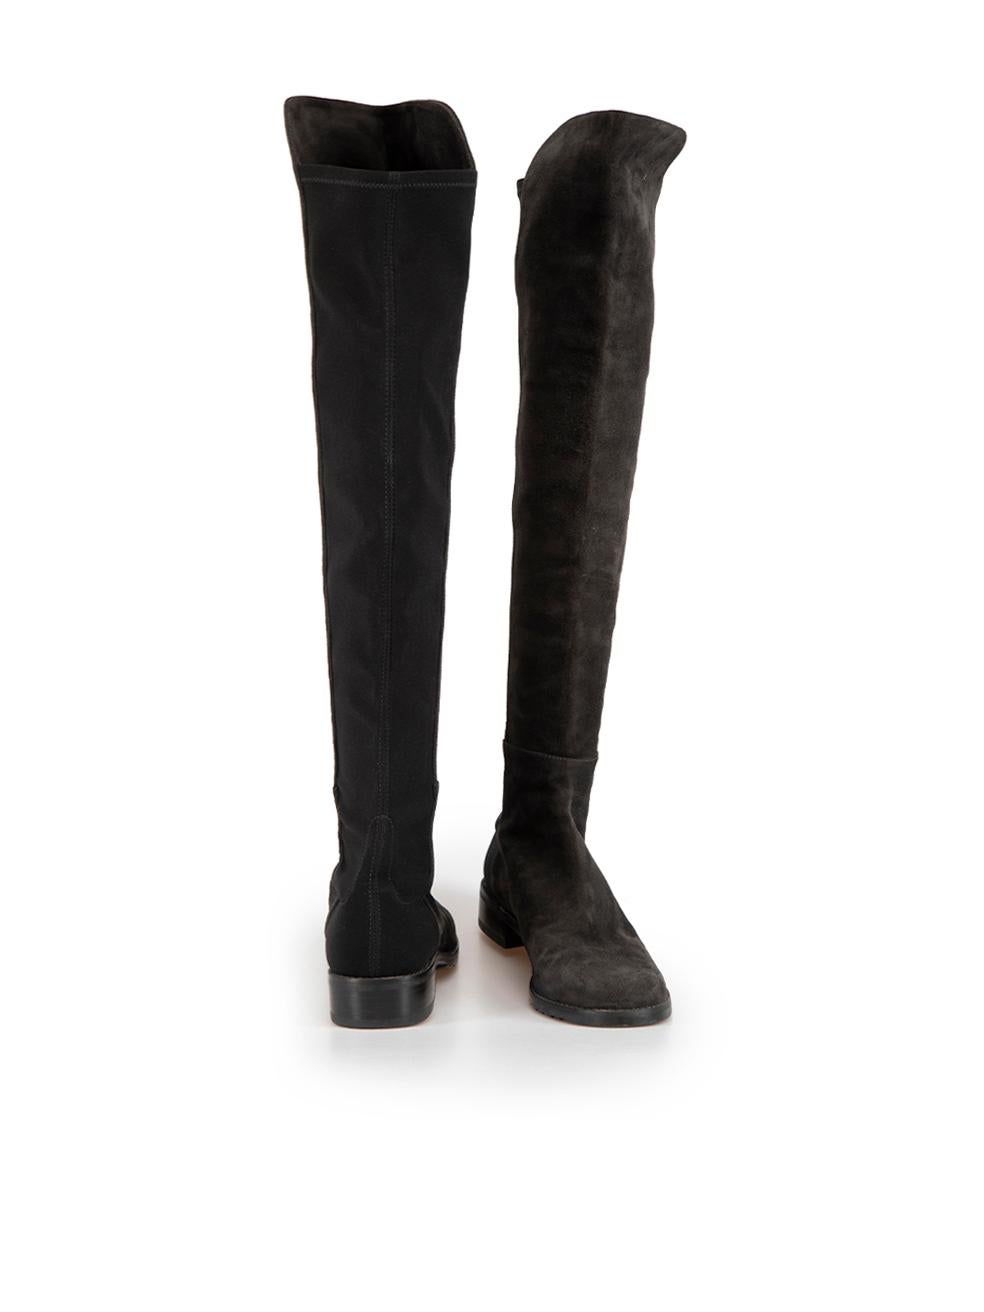 Black Stuart Weitzman Grey Suede Thigh-High Boots Size US 7.5